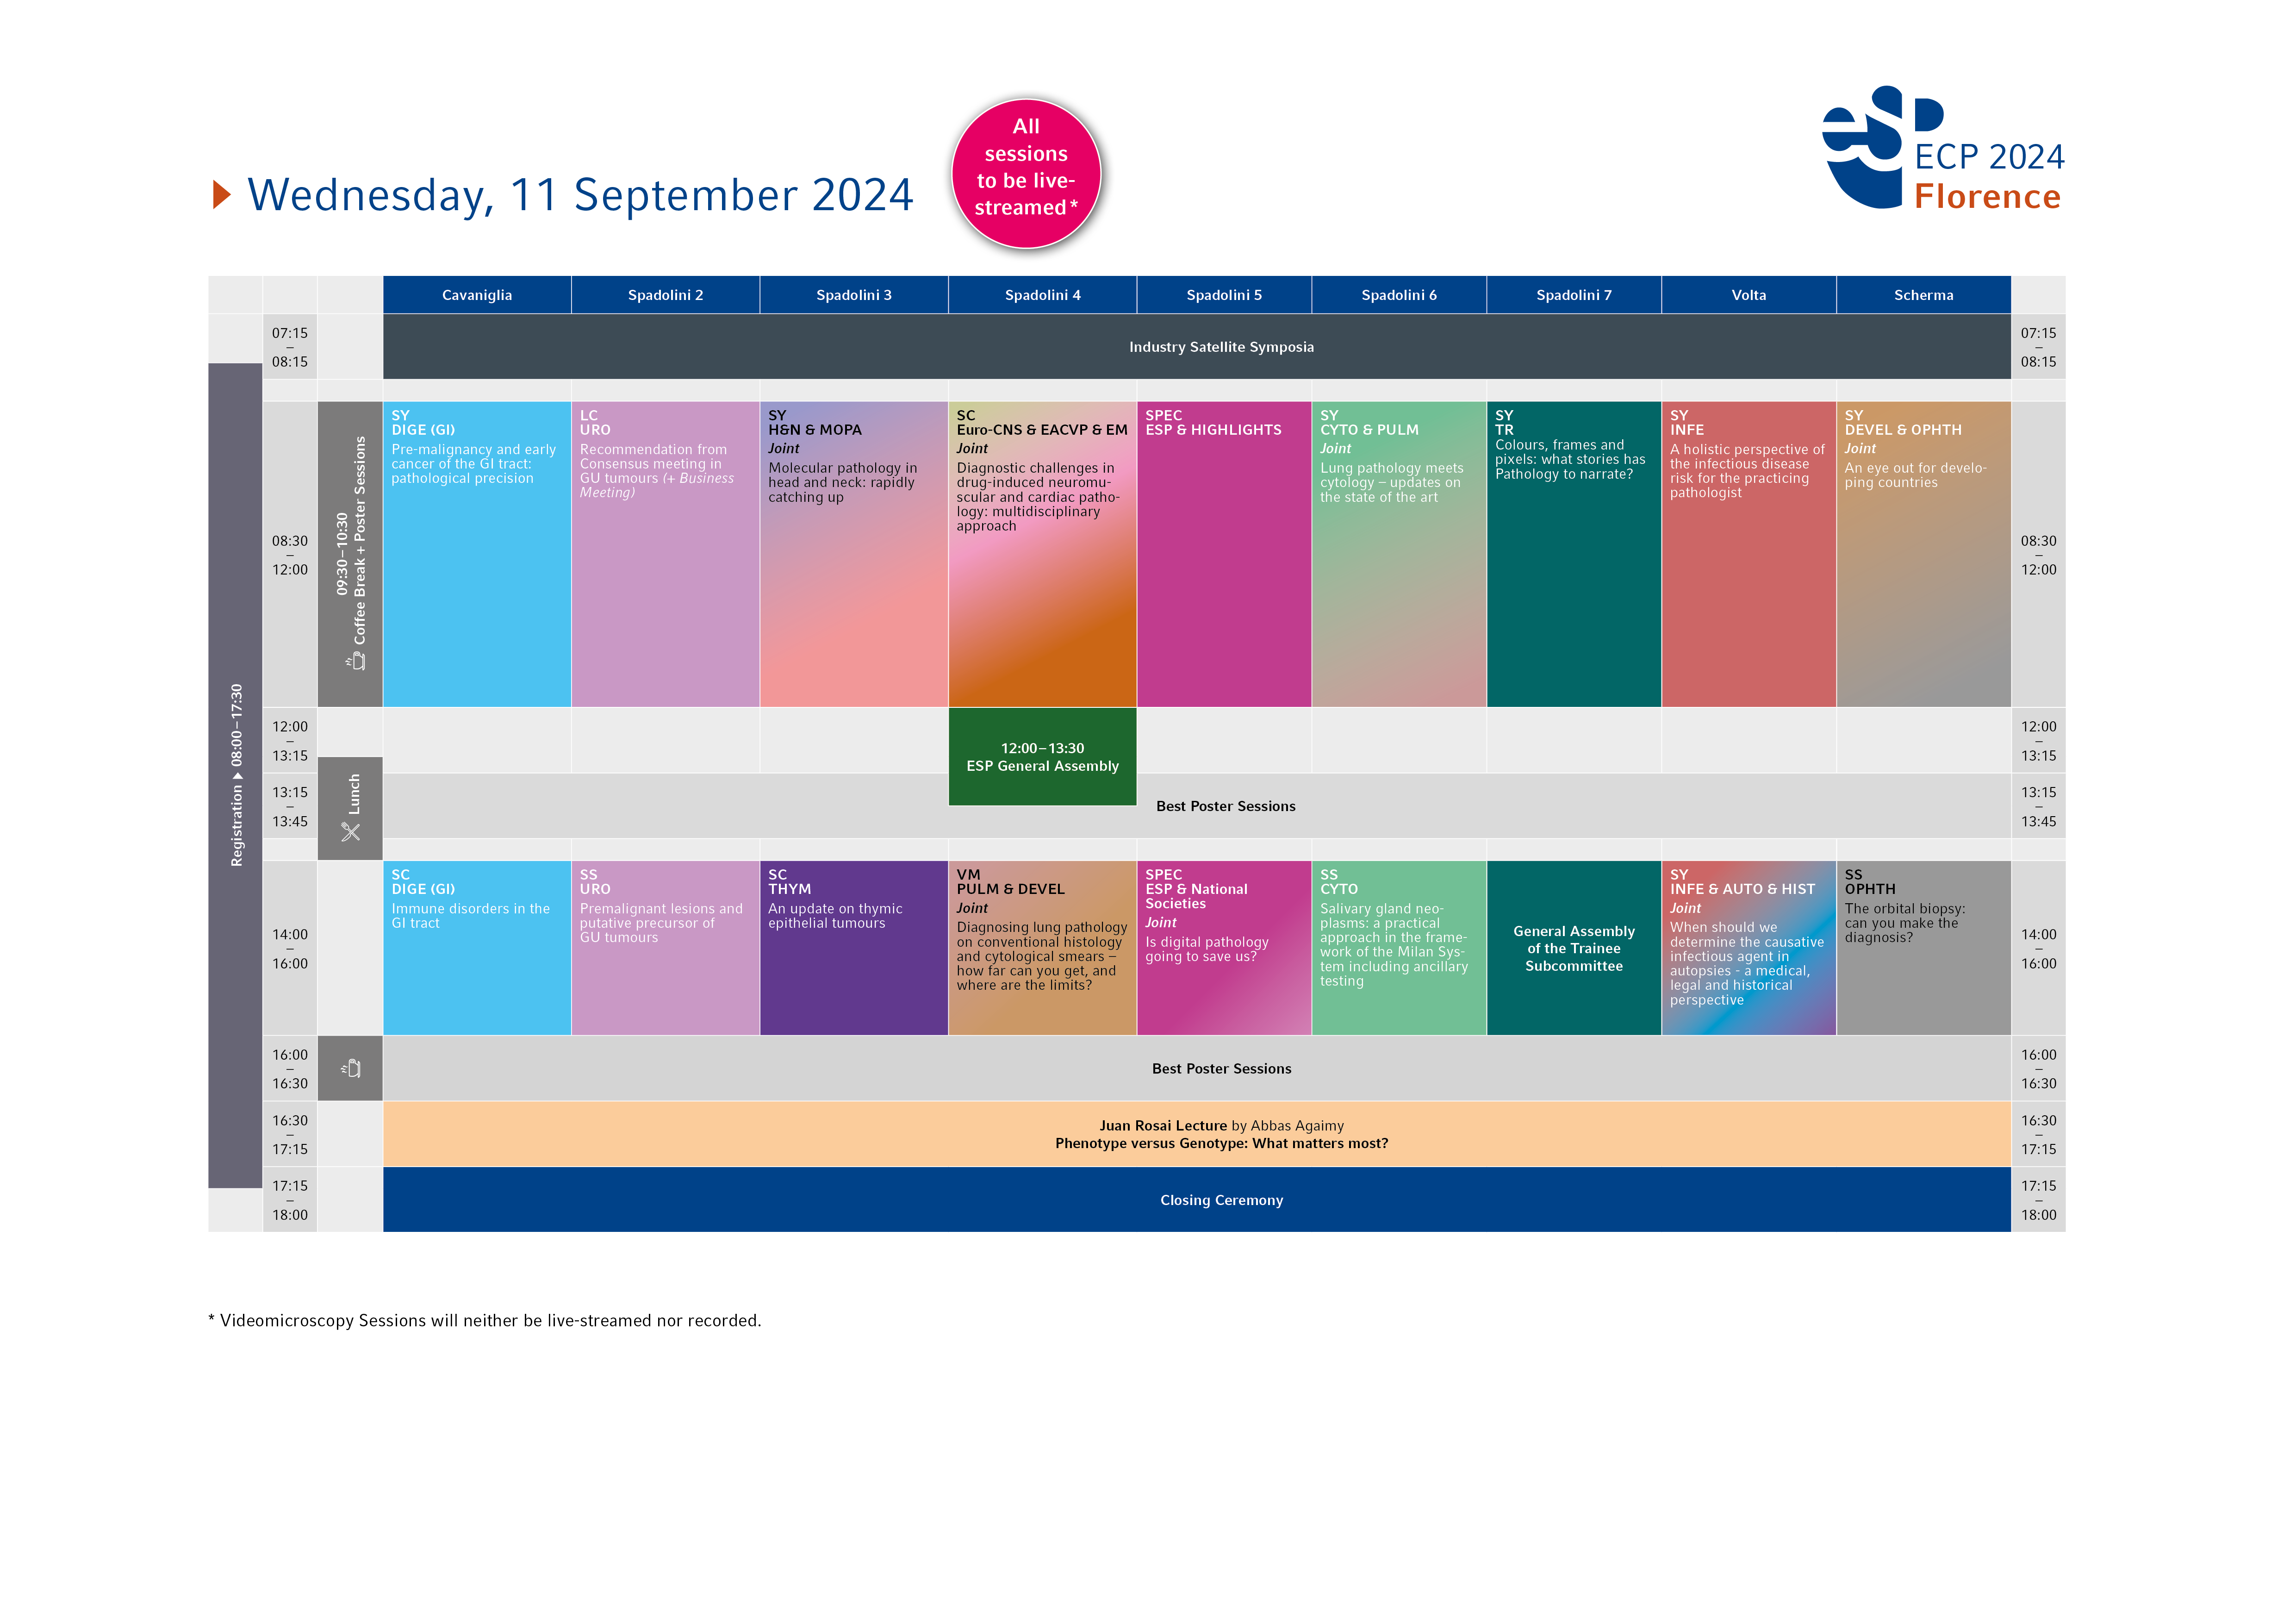 Programme Schedule - Wednesday, 11 September 2024